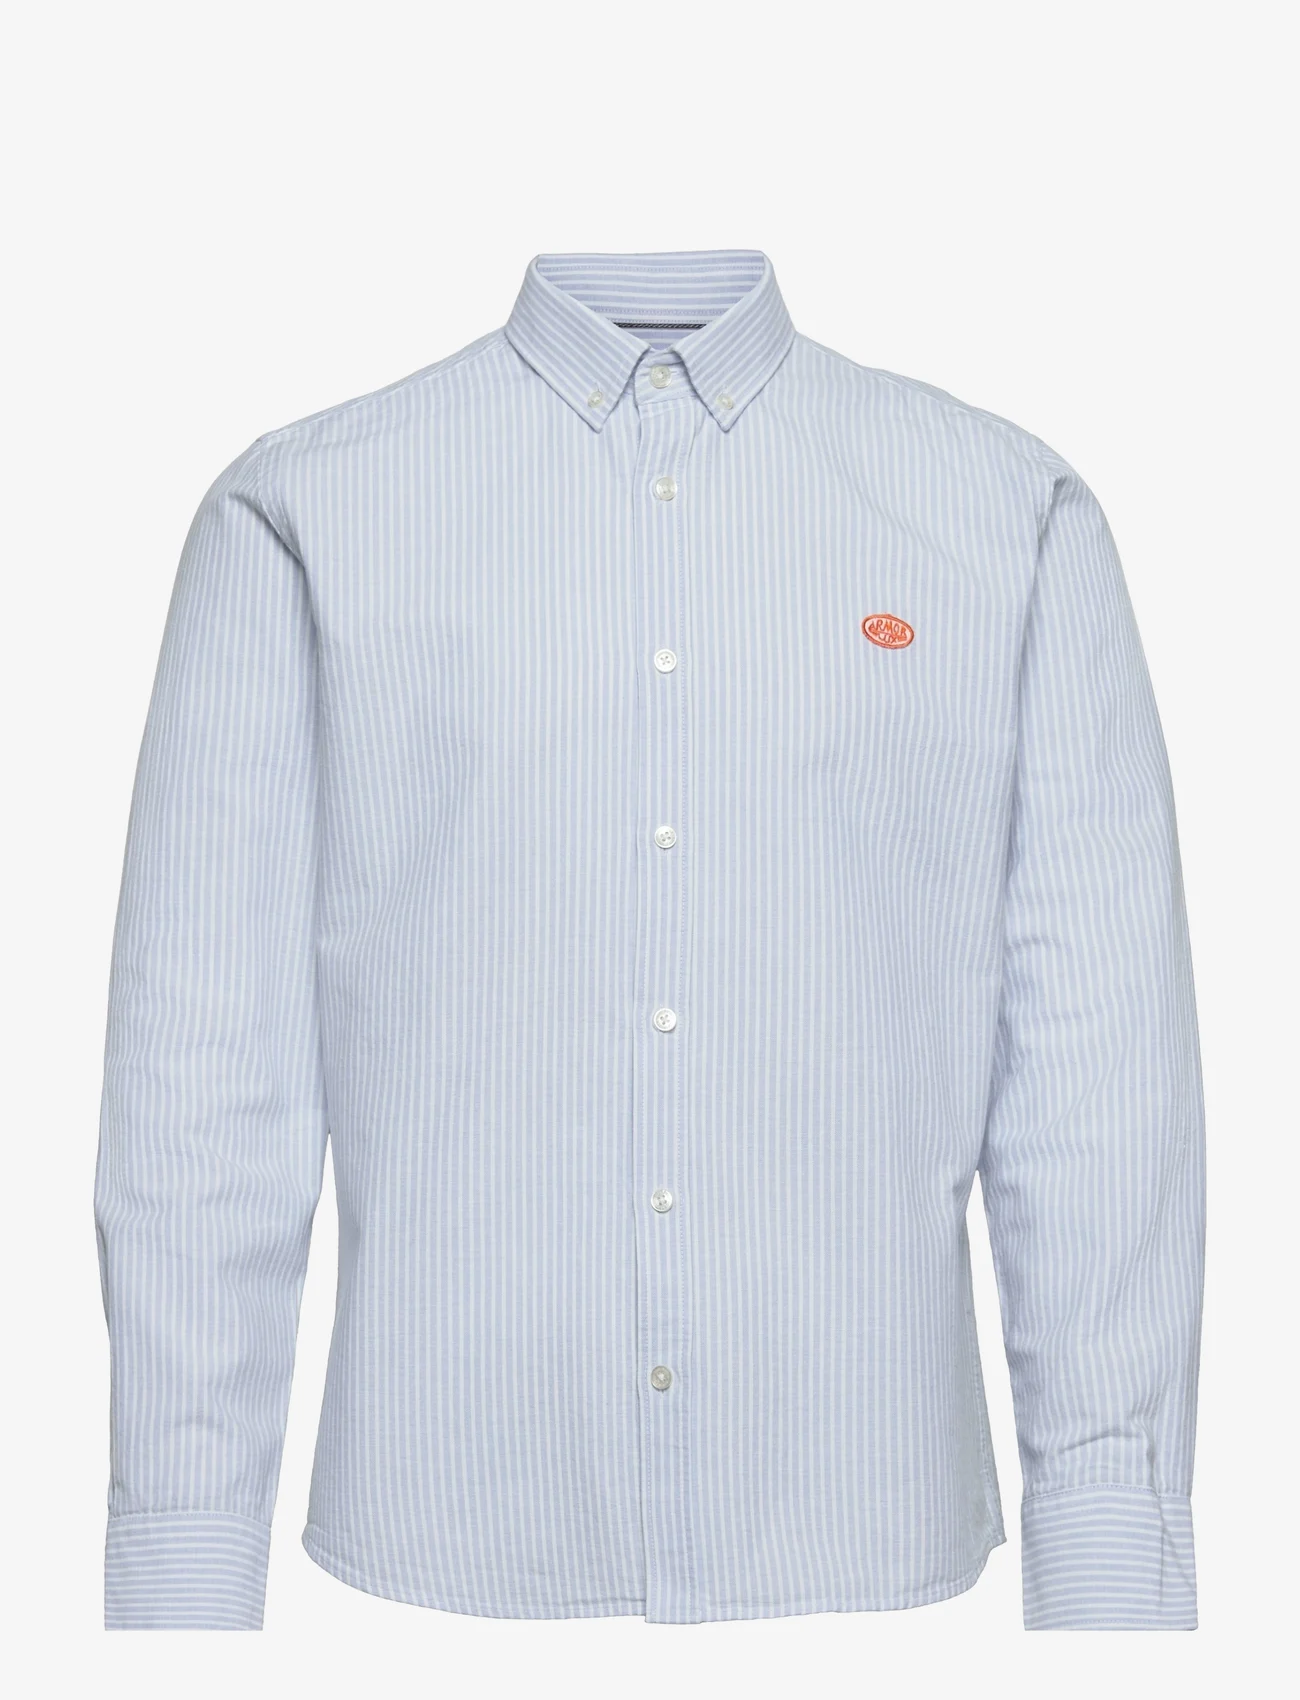 Armor Lux - Oxford shirt - oxford stila krekli - sky blue/milk - 0